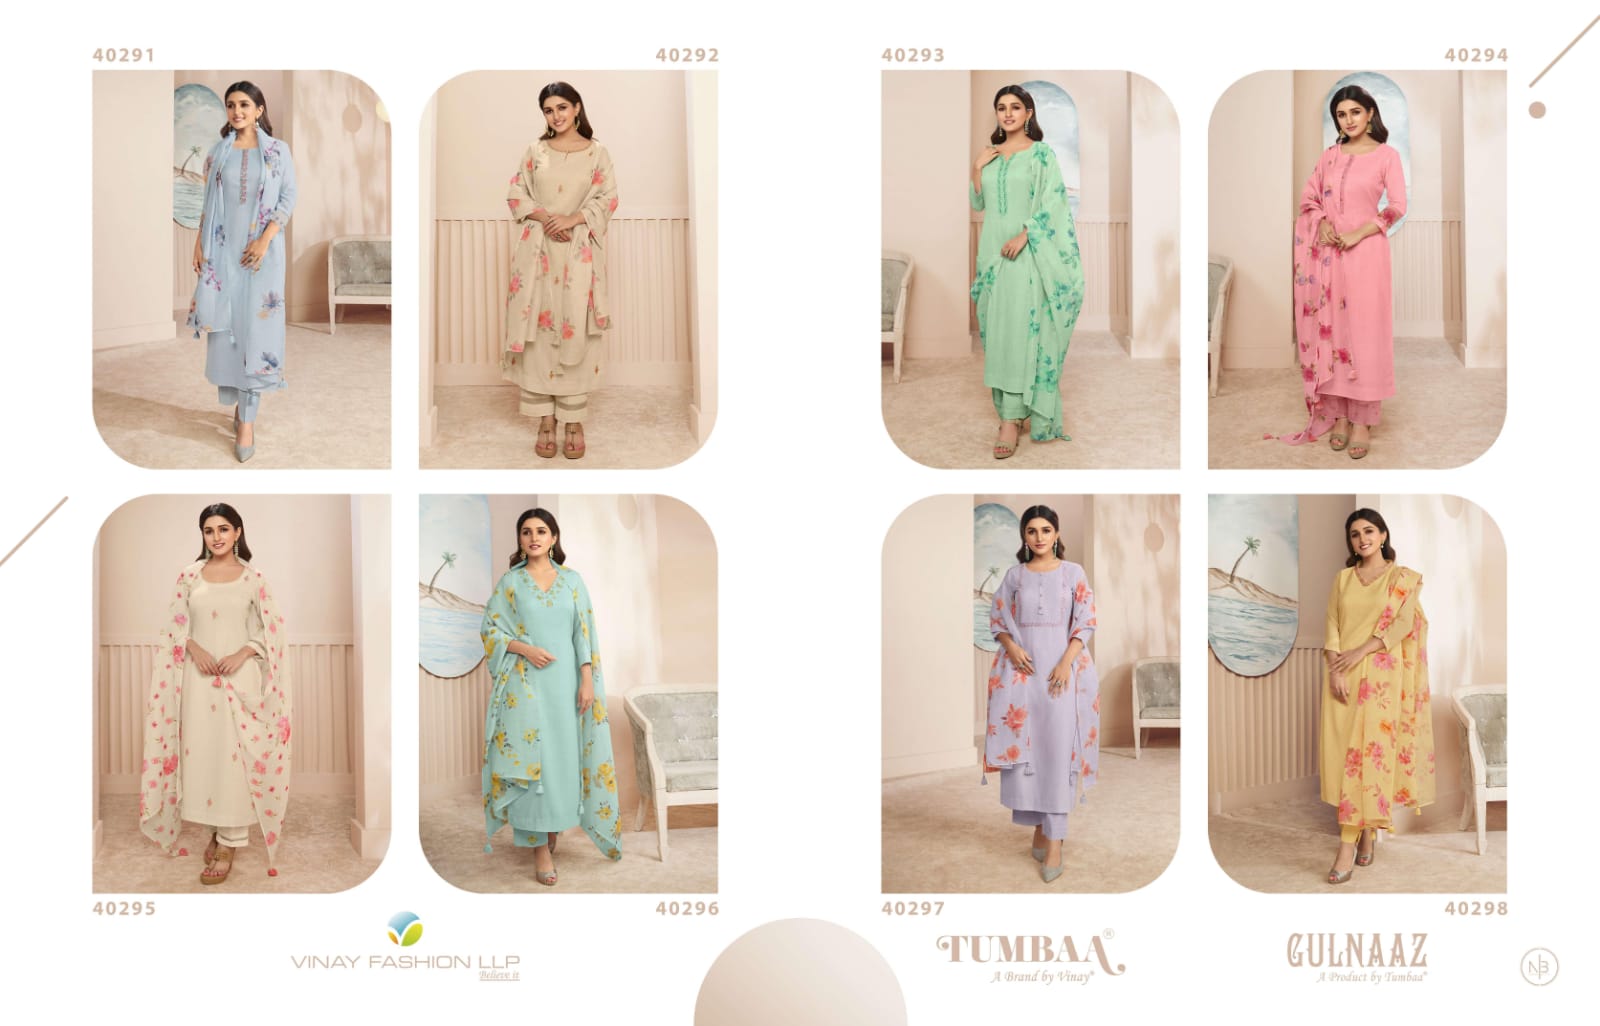 Vinay Tumbaa Gulnaaz collection 4